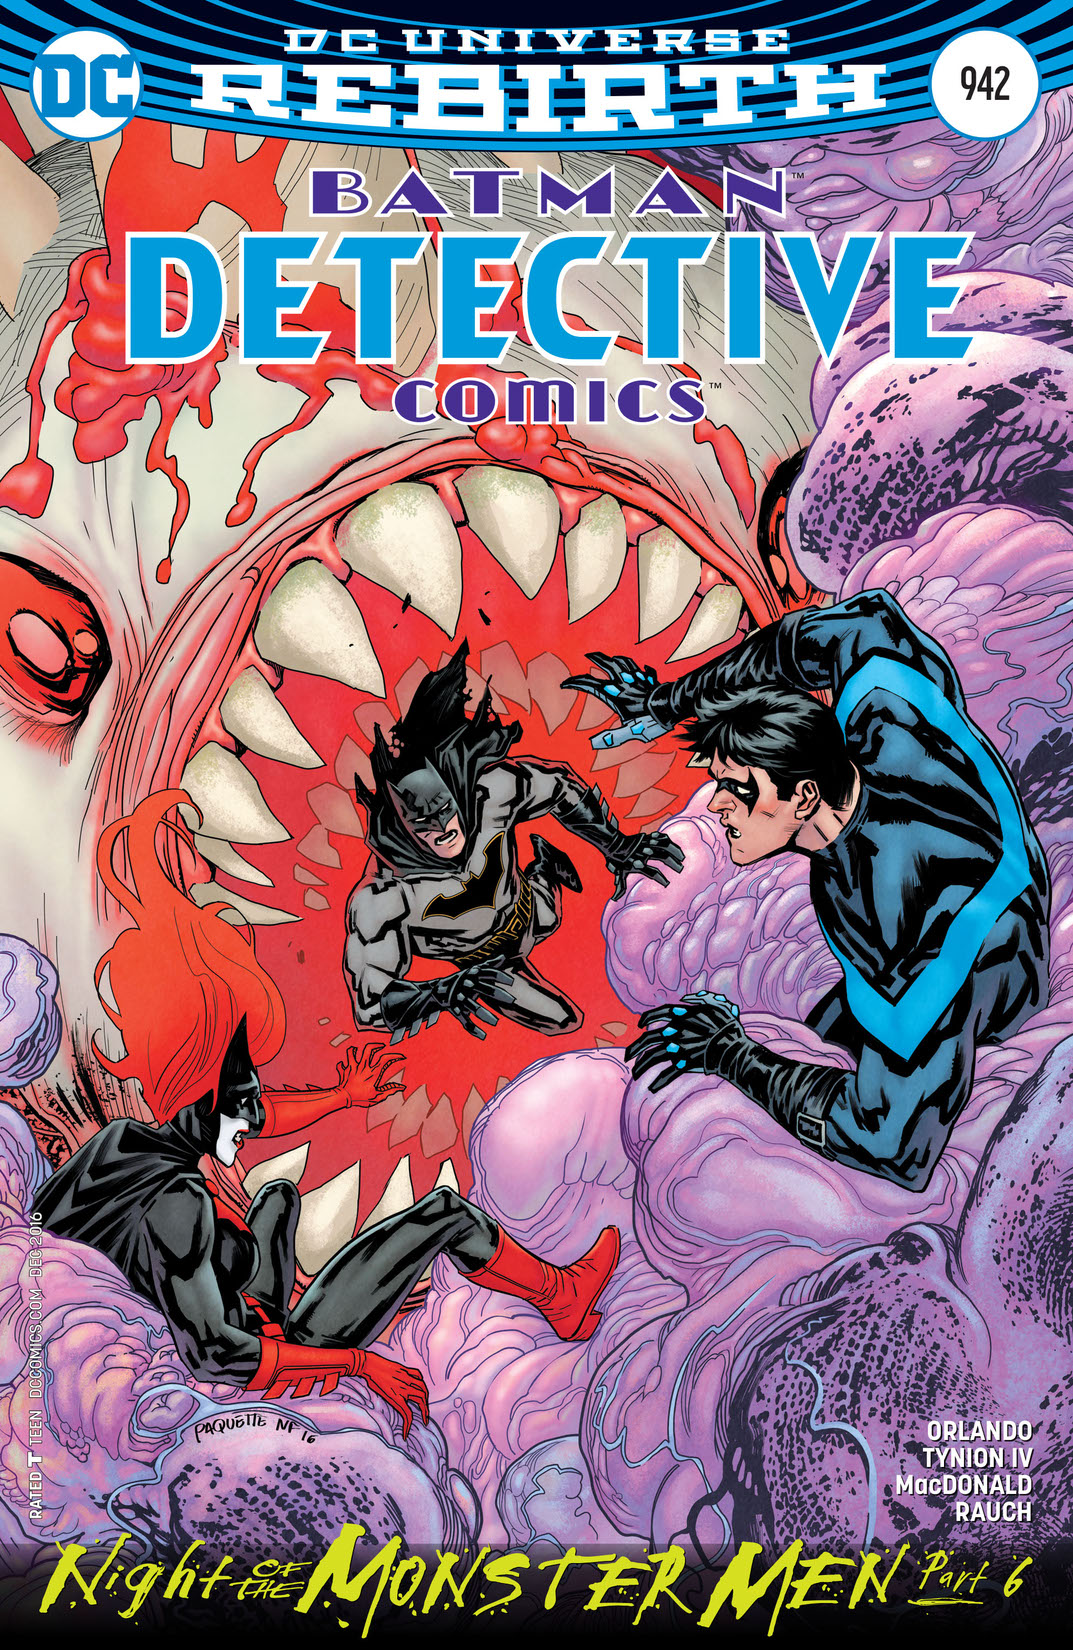 Detective Comics (2016-) #942 preview images